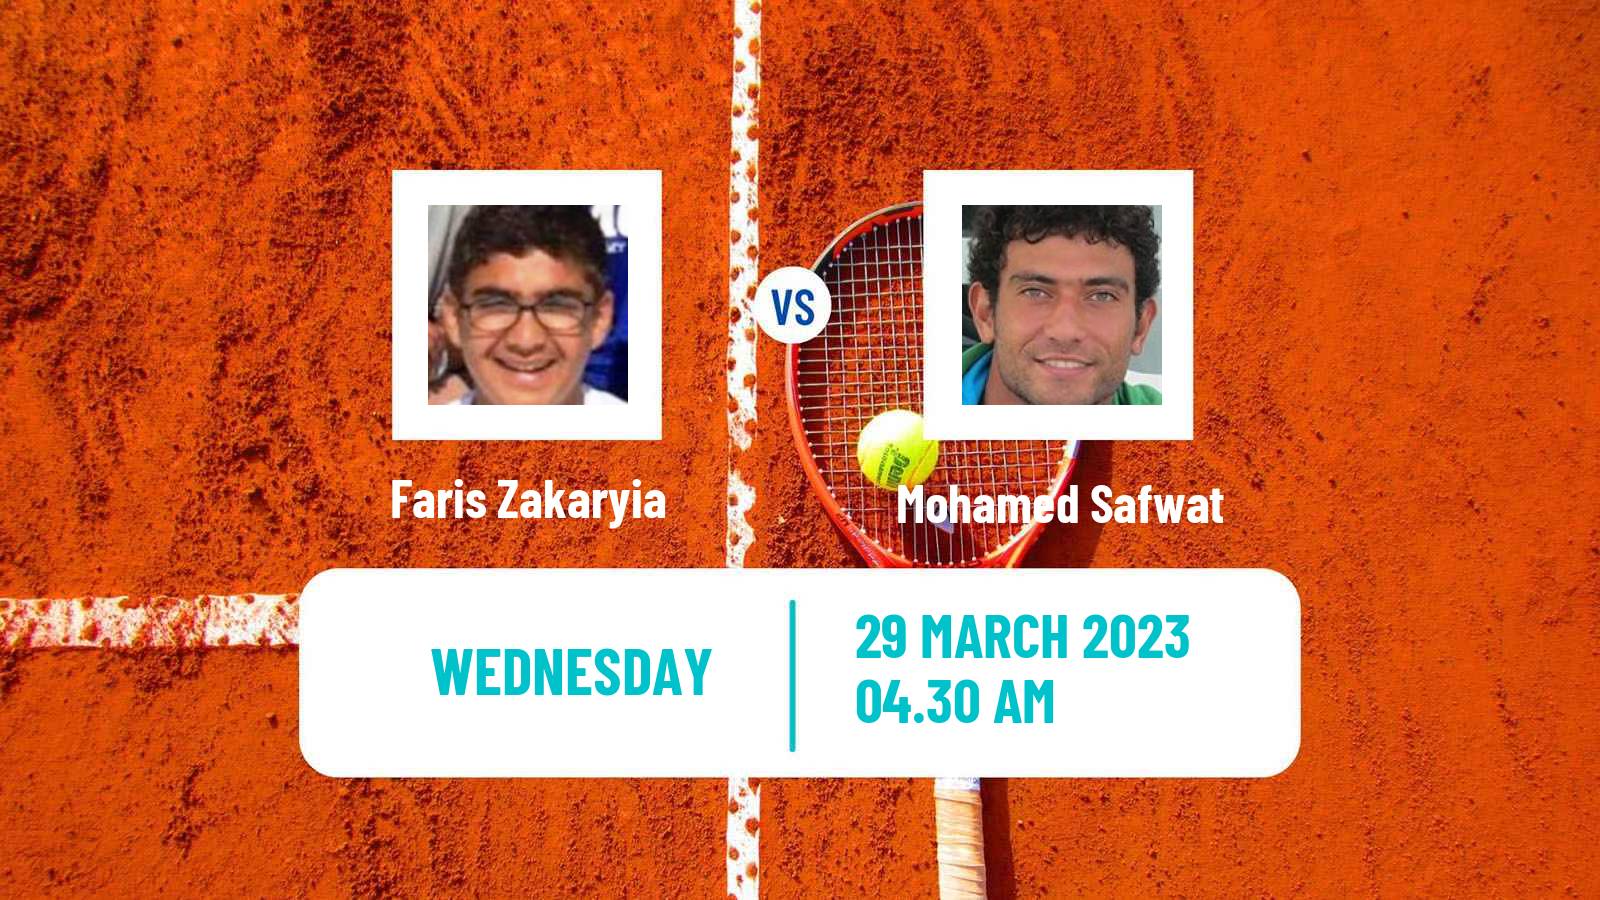 Tennis ITF Tournaments Faris Zakaryia - Mohamed Safwat